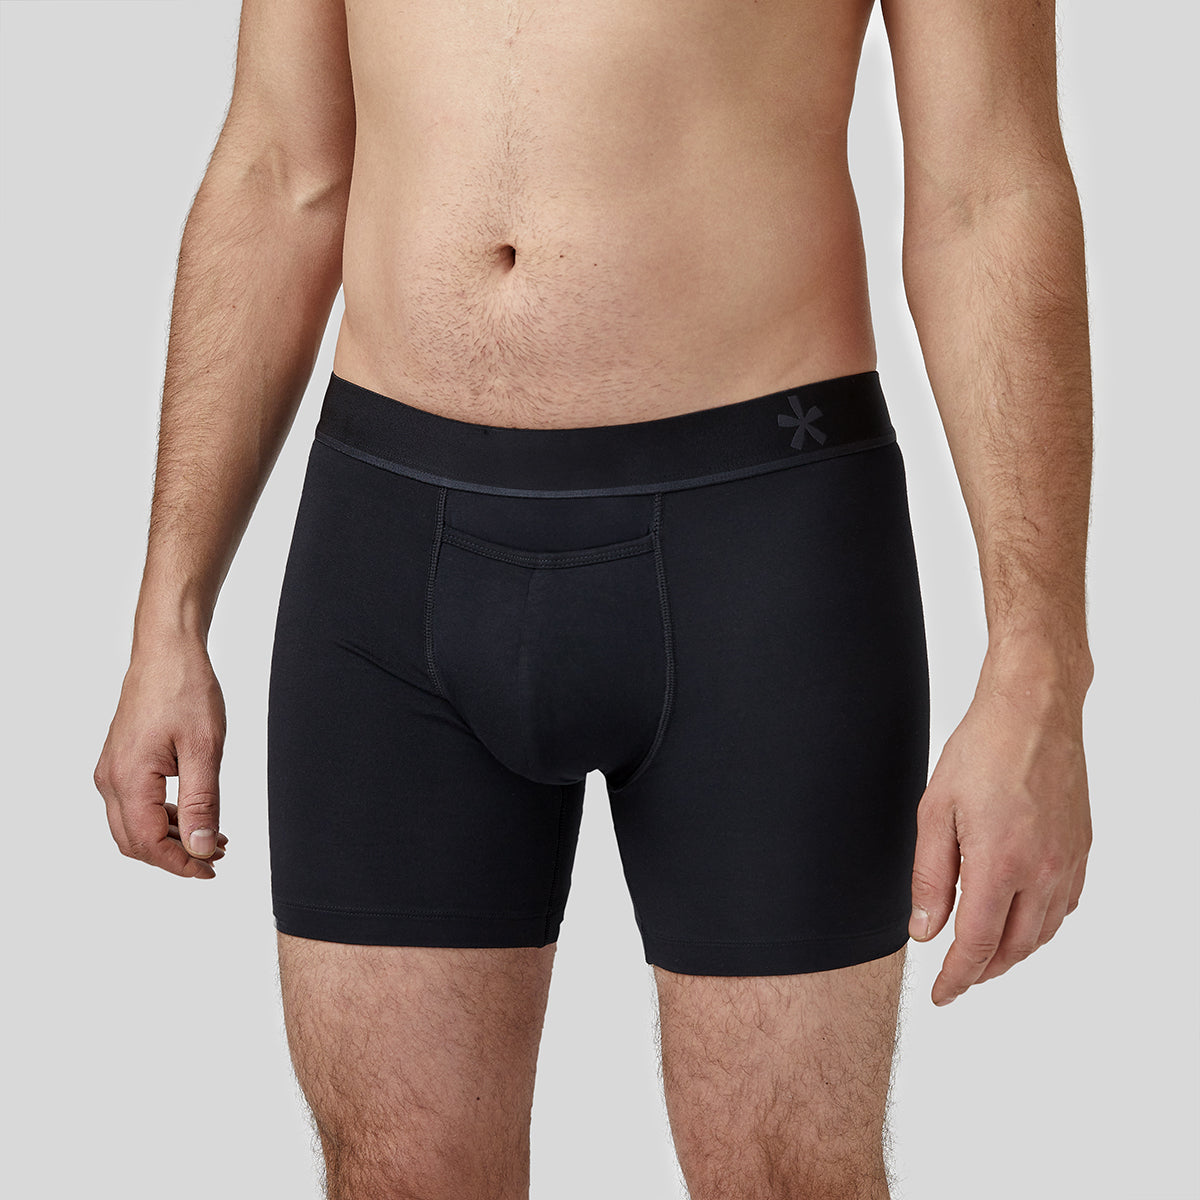 Boxer Shorts & Underwear - Uniform Research